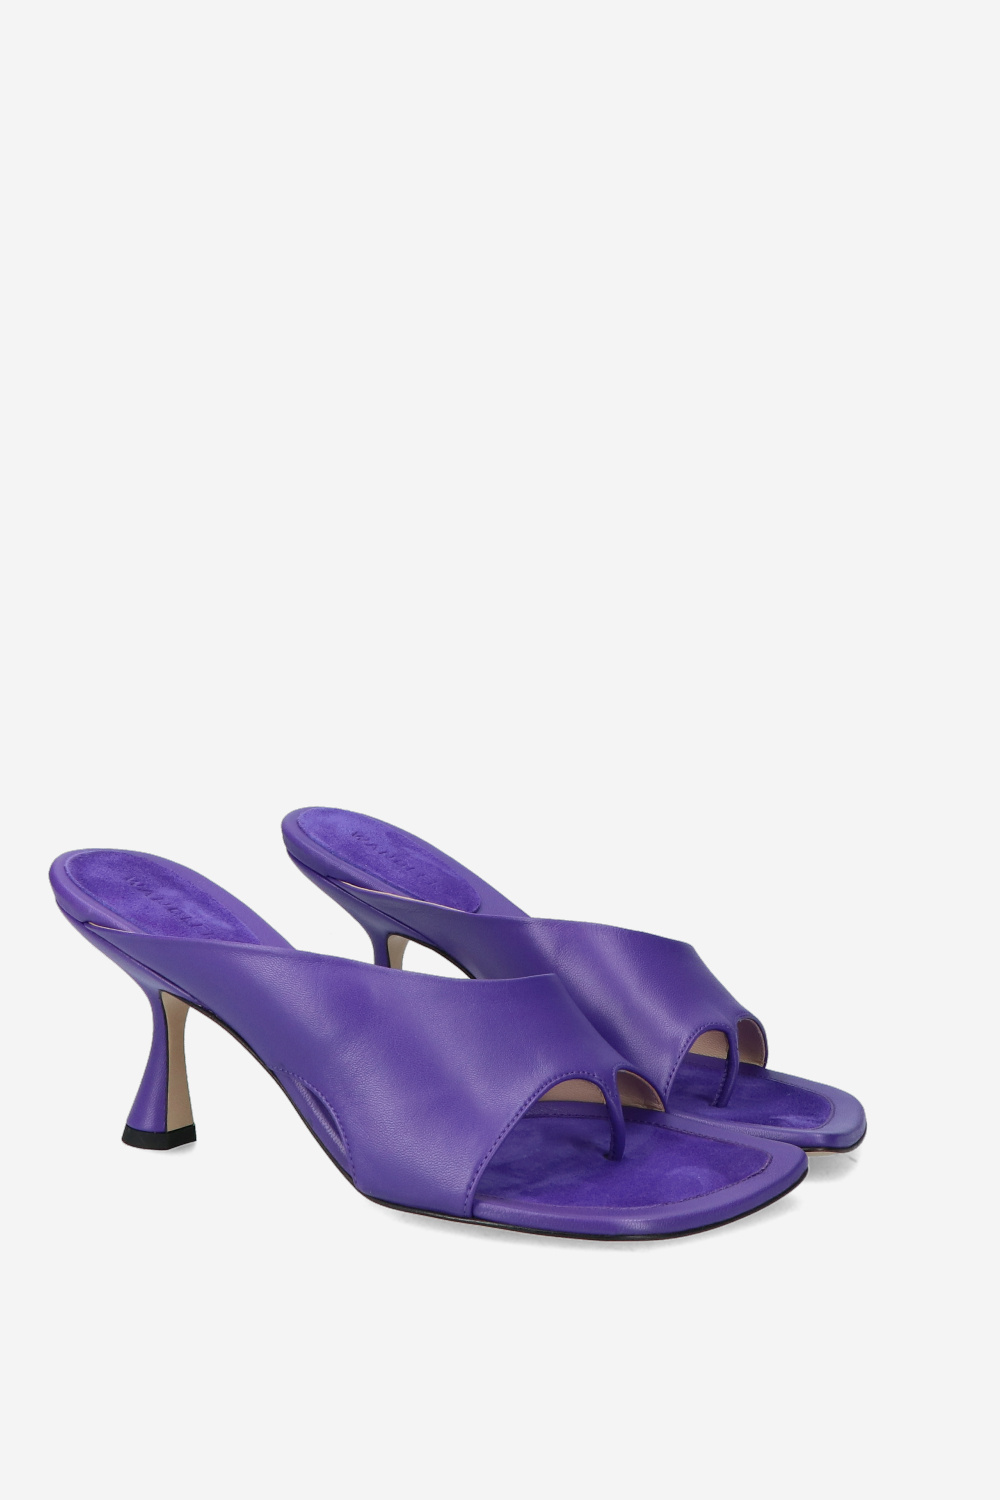 Wandler Sandals Purple